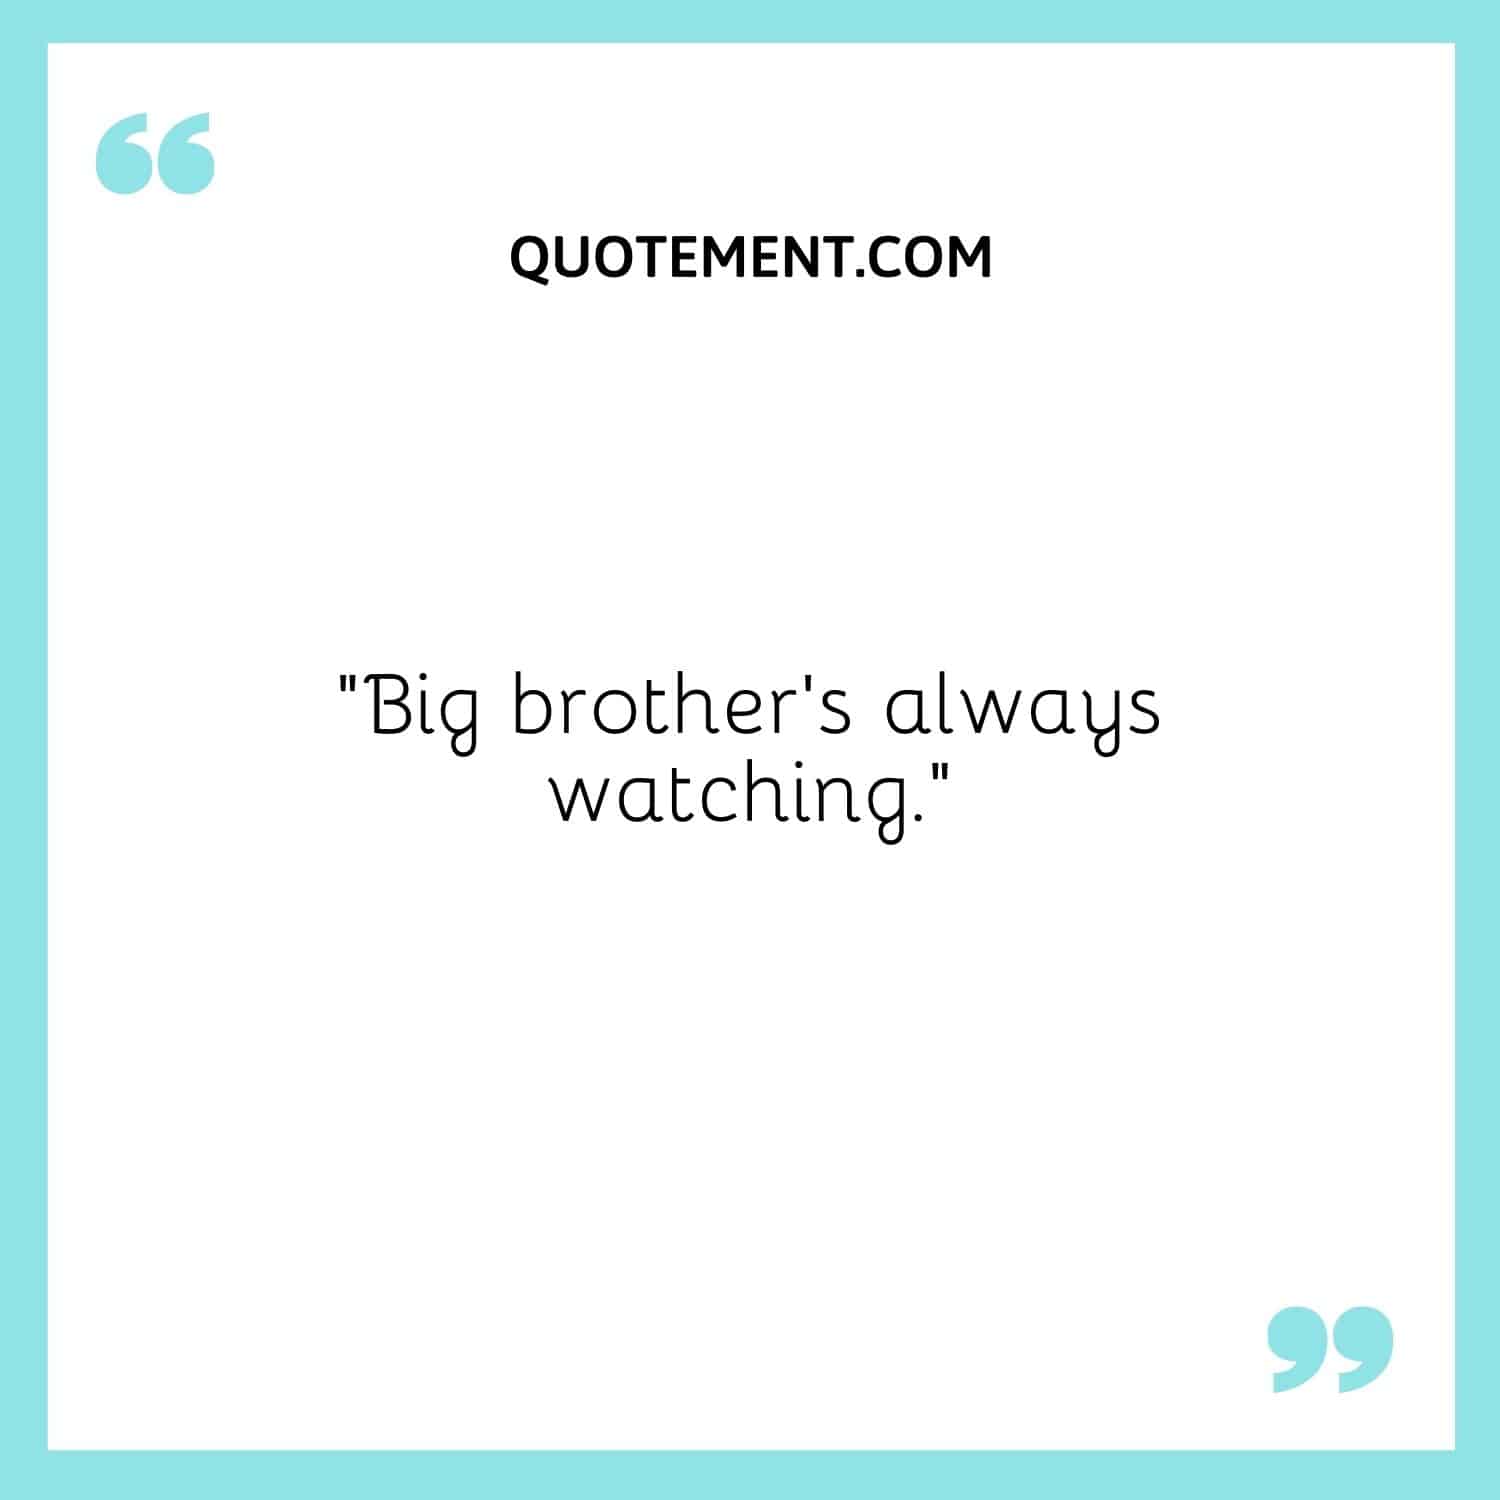 Big brother's always watching.